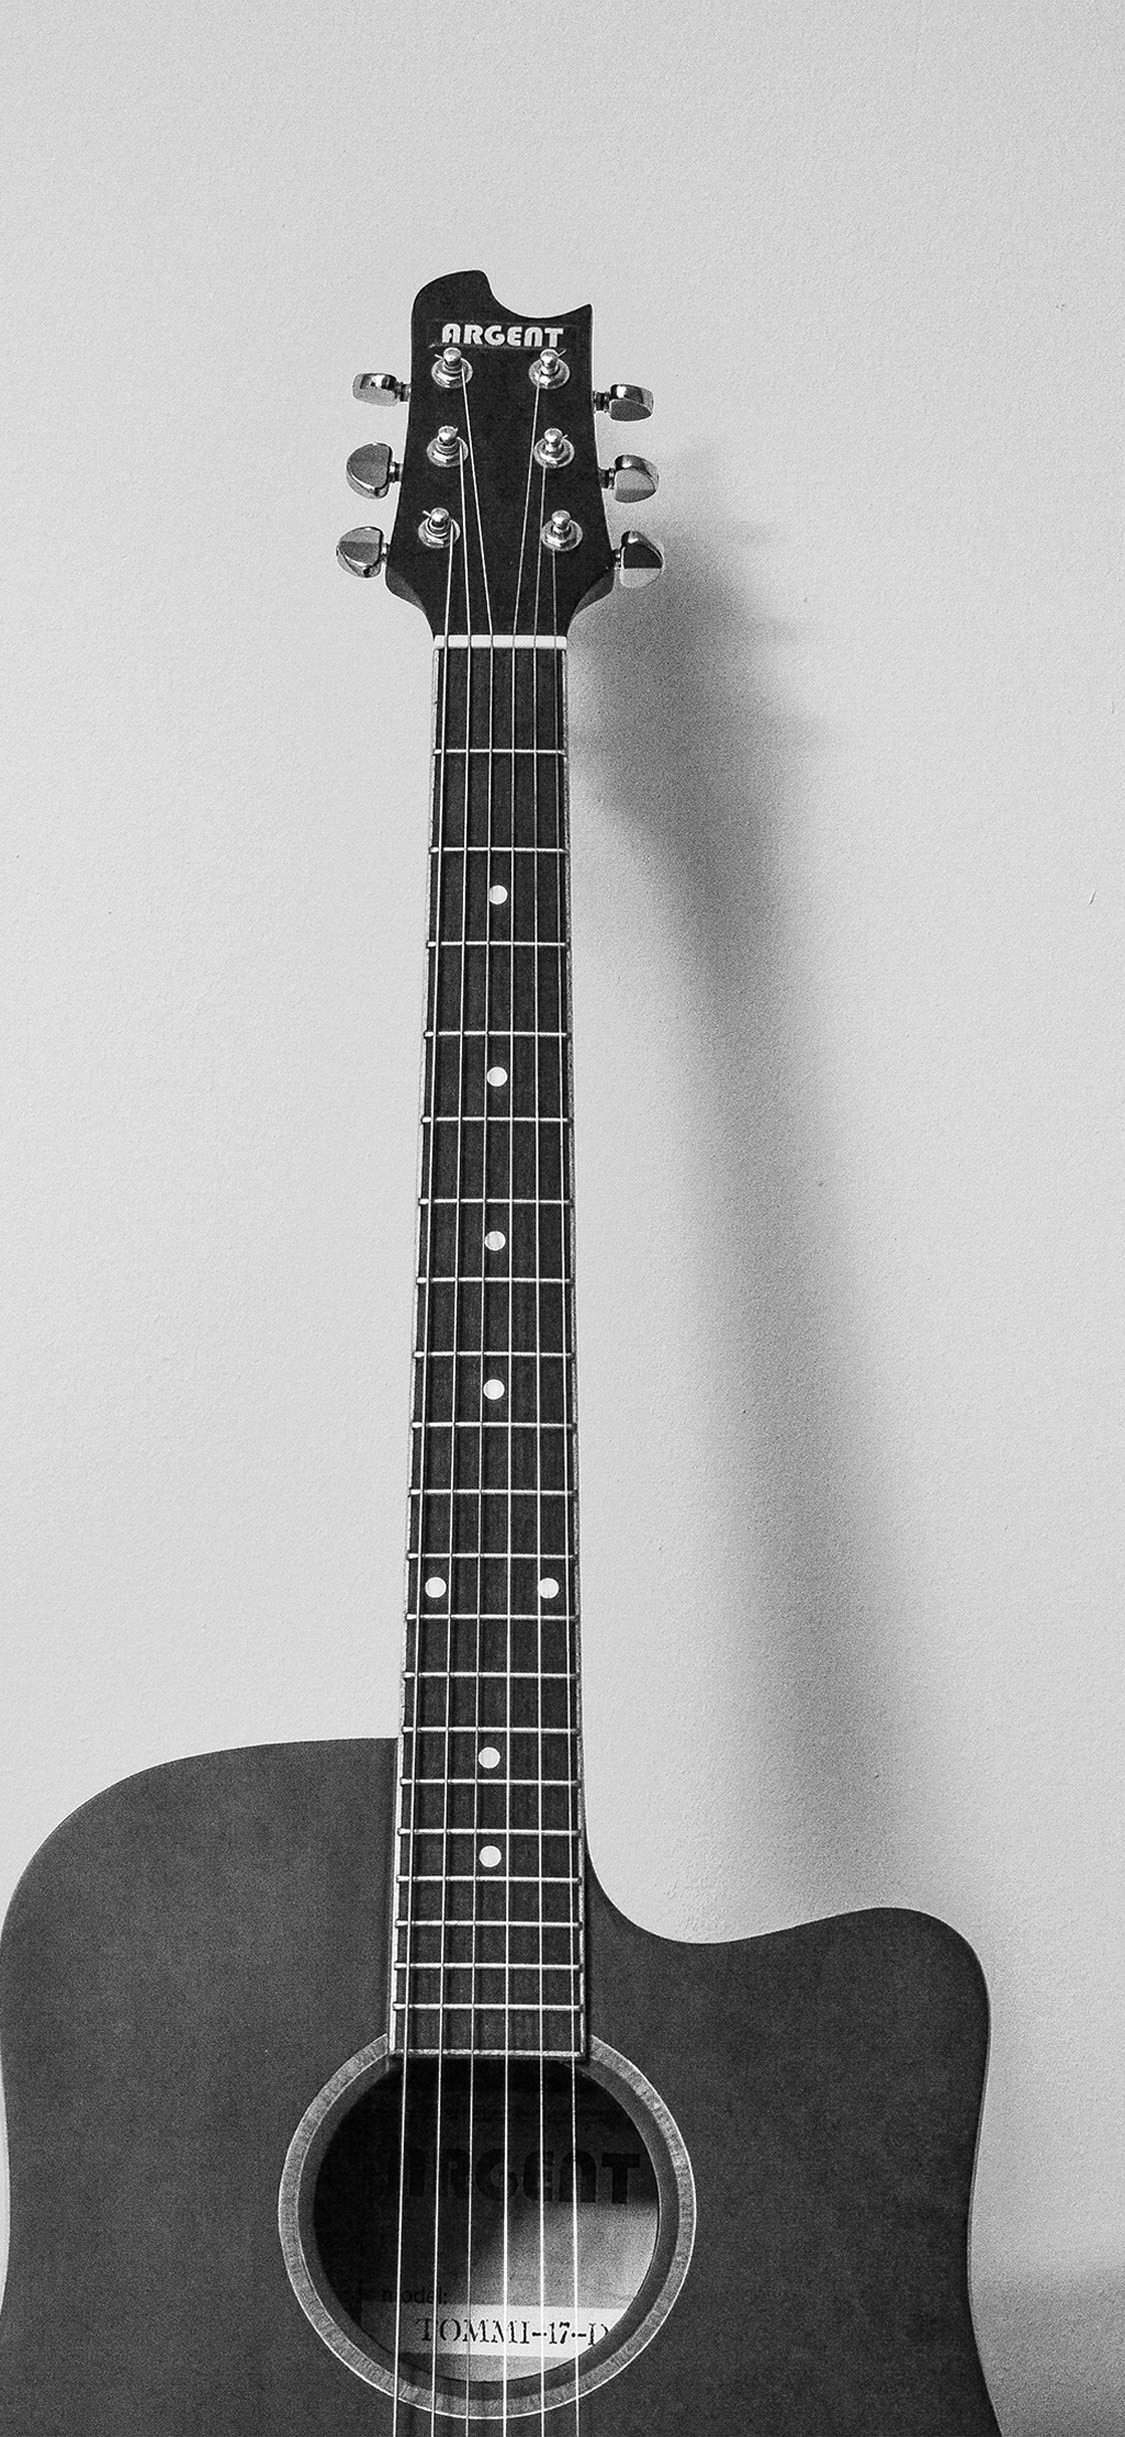 1125x2437 Classic guitar instrument music 2 iPhone X Wallpaper